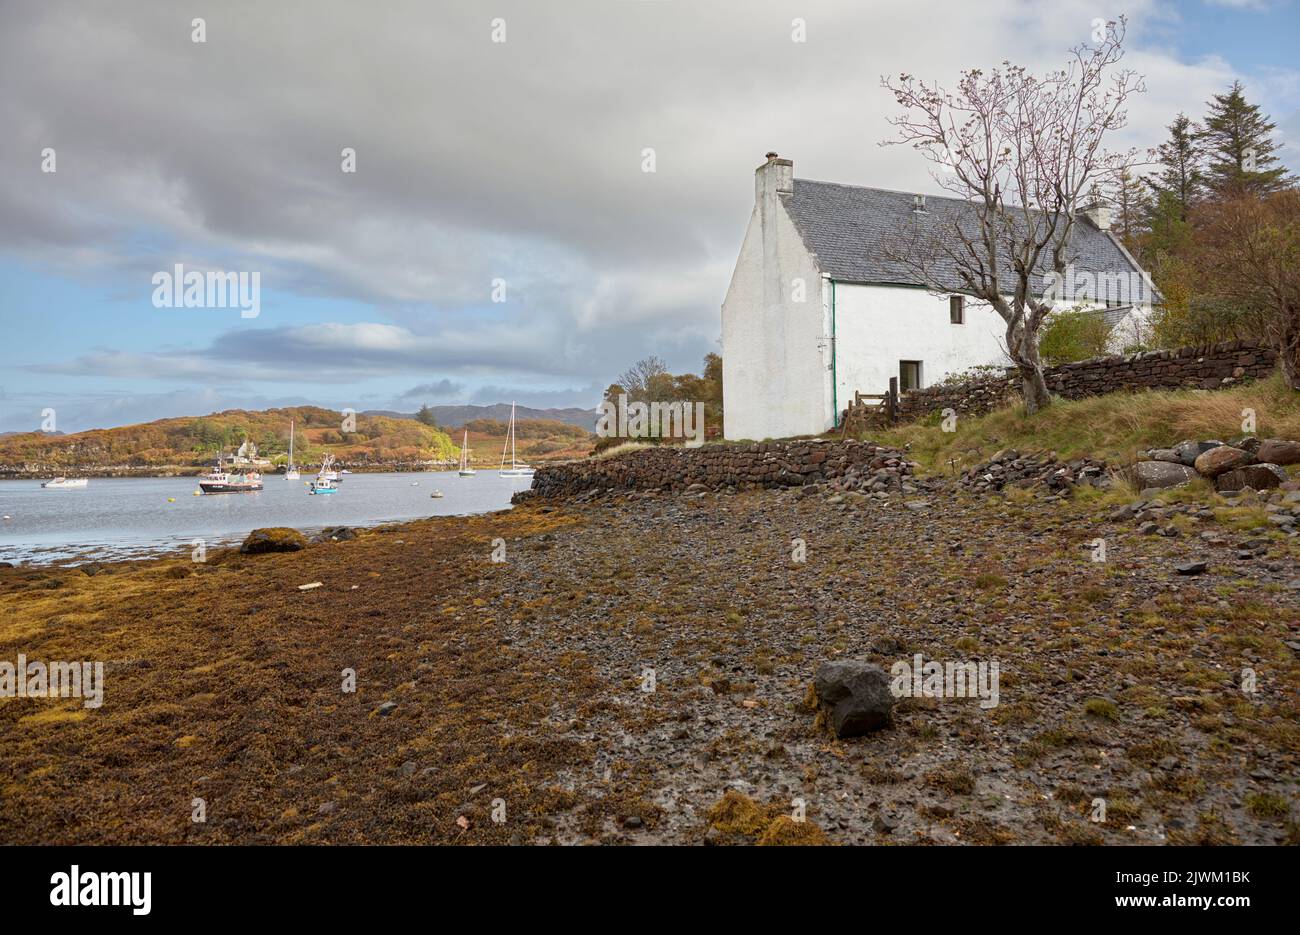 View of Dry-Island, Bedachro, Scotland. Stock Photo